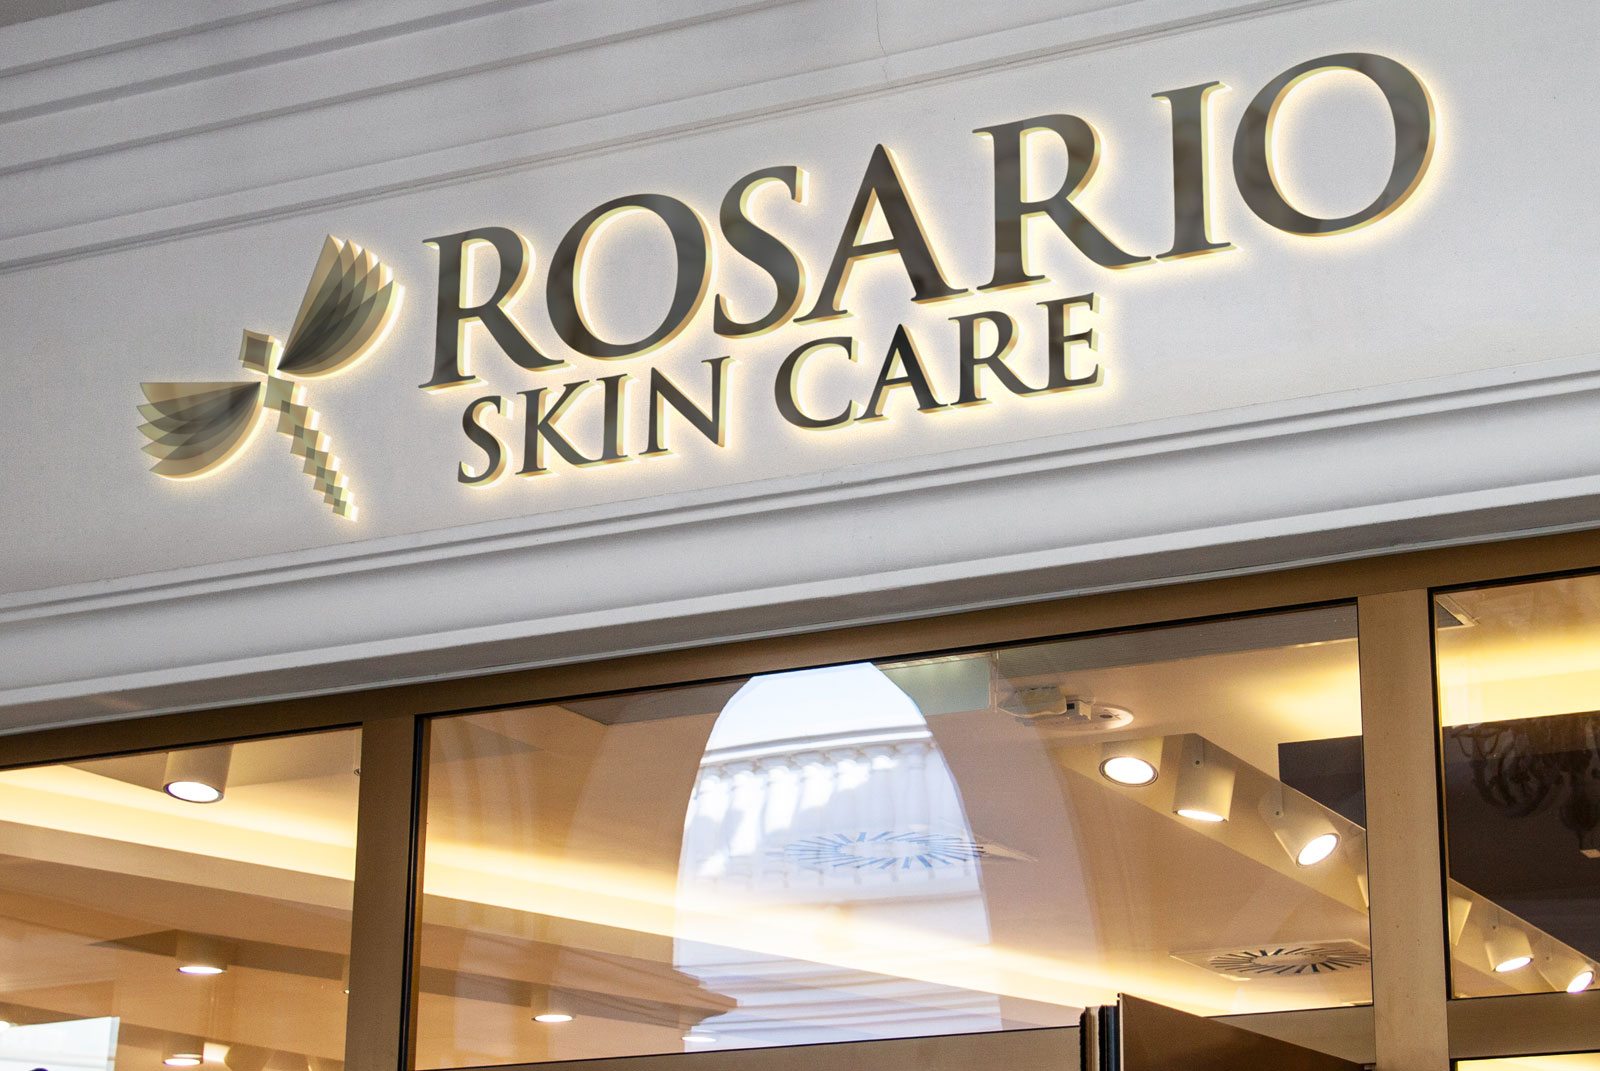 Rosario Skin Care Store Front